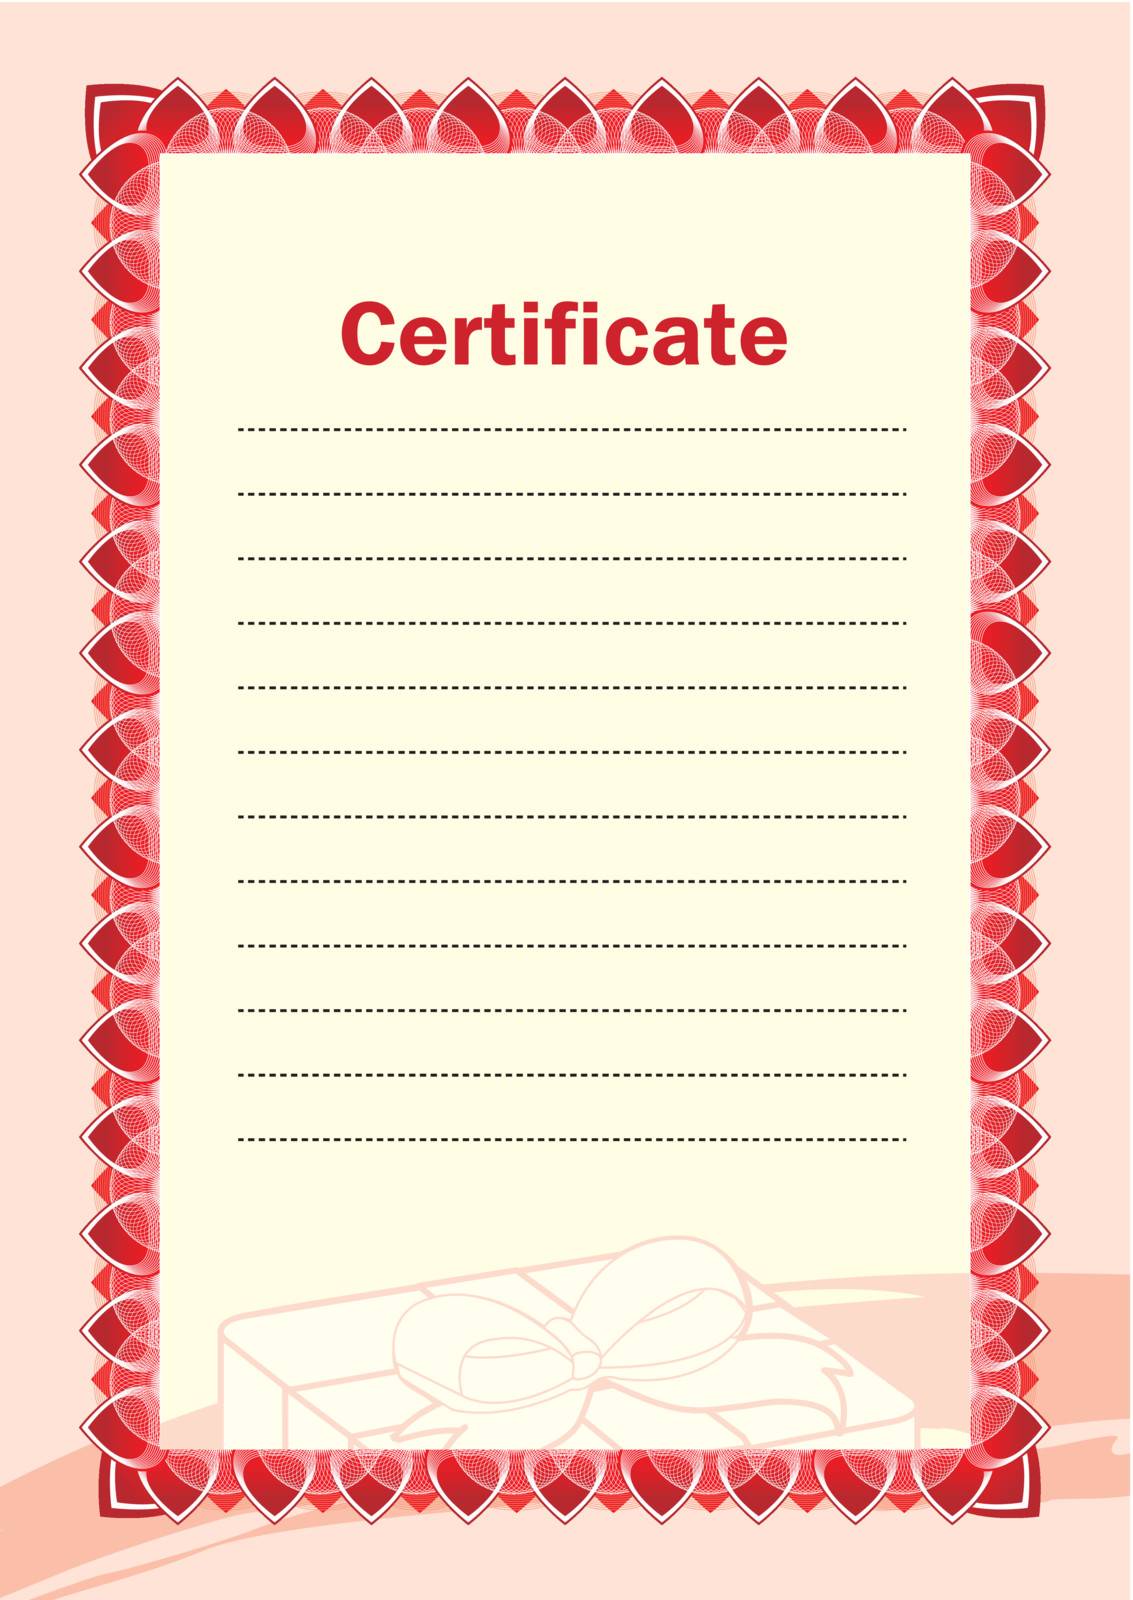 Blank of certificate